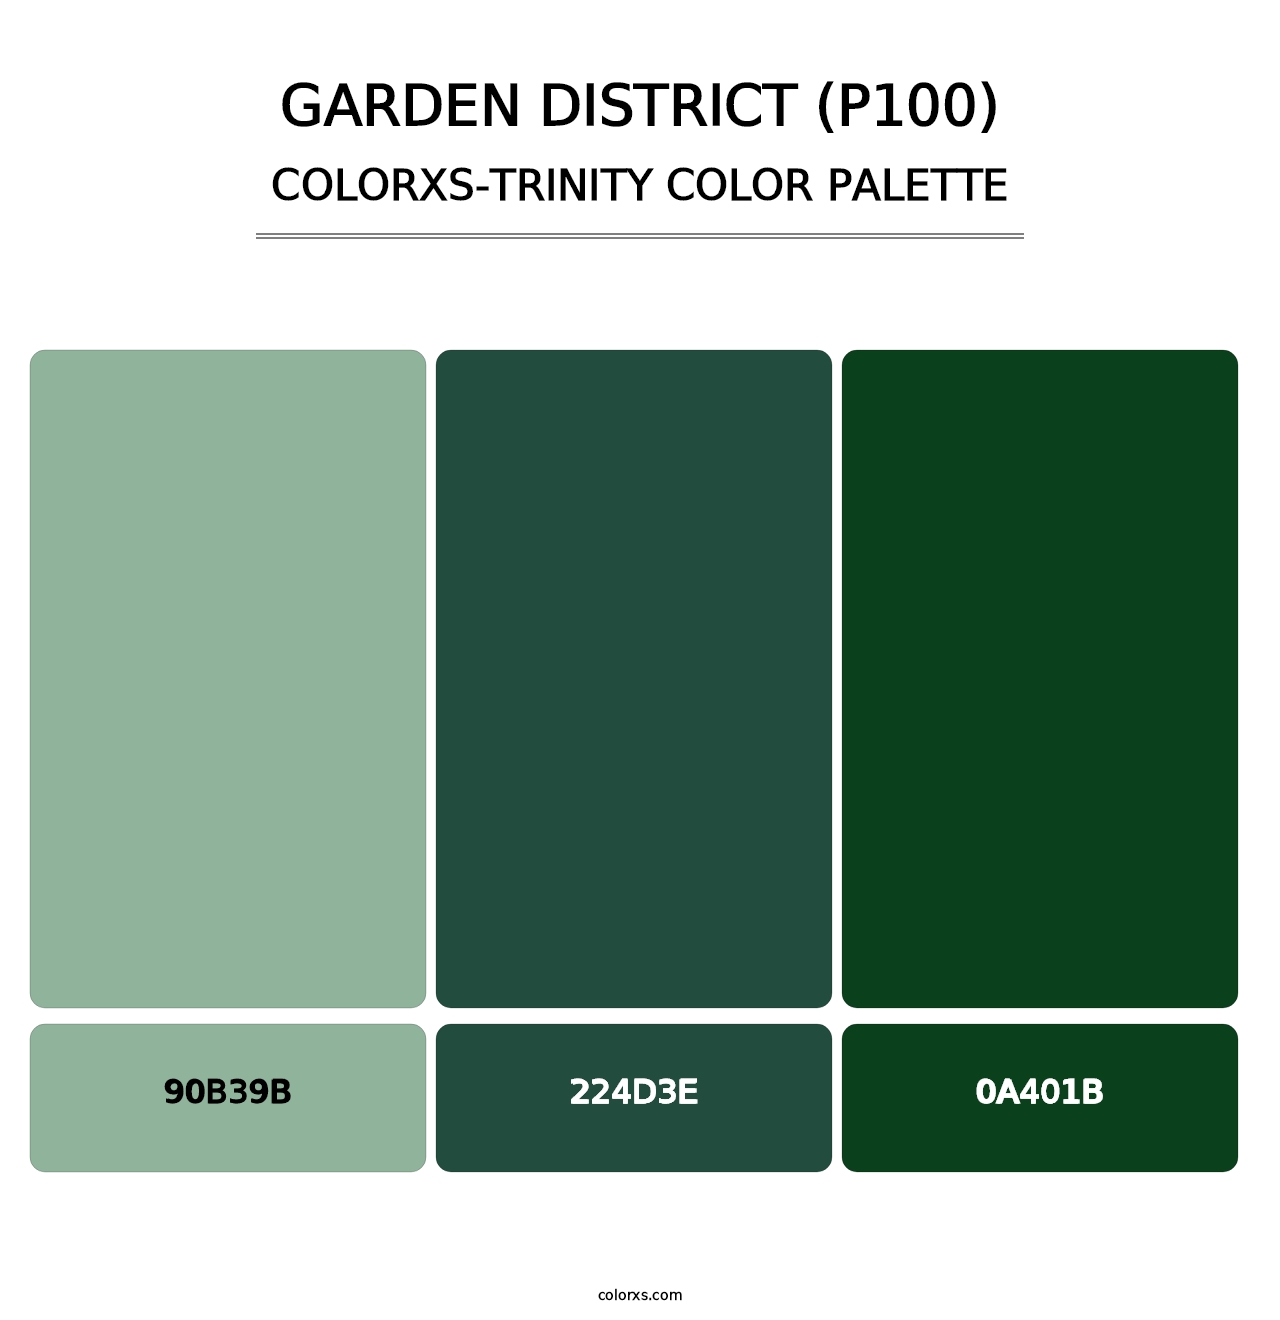 Garden District (P100) - Colorxs Trinity Palette